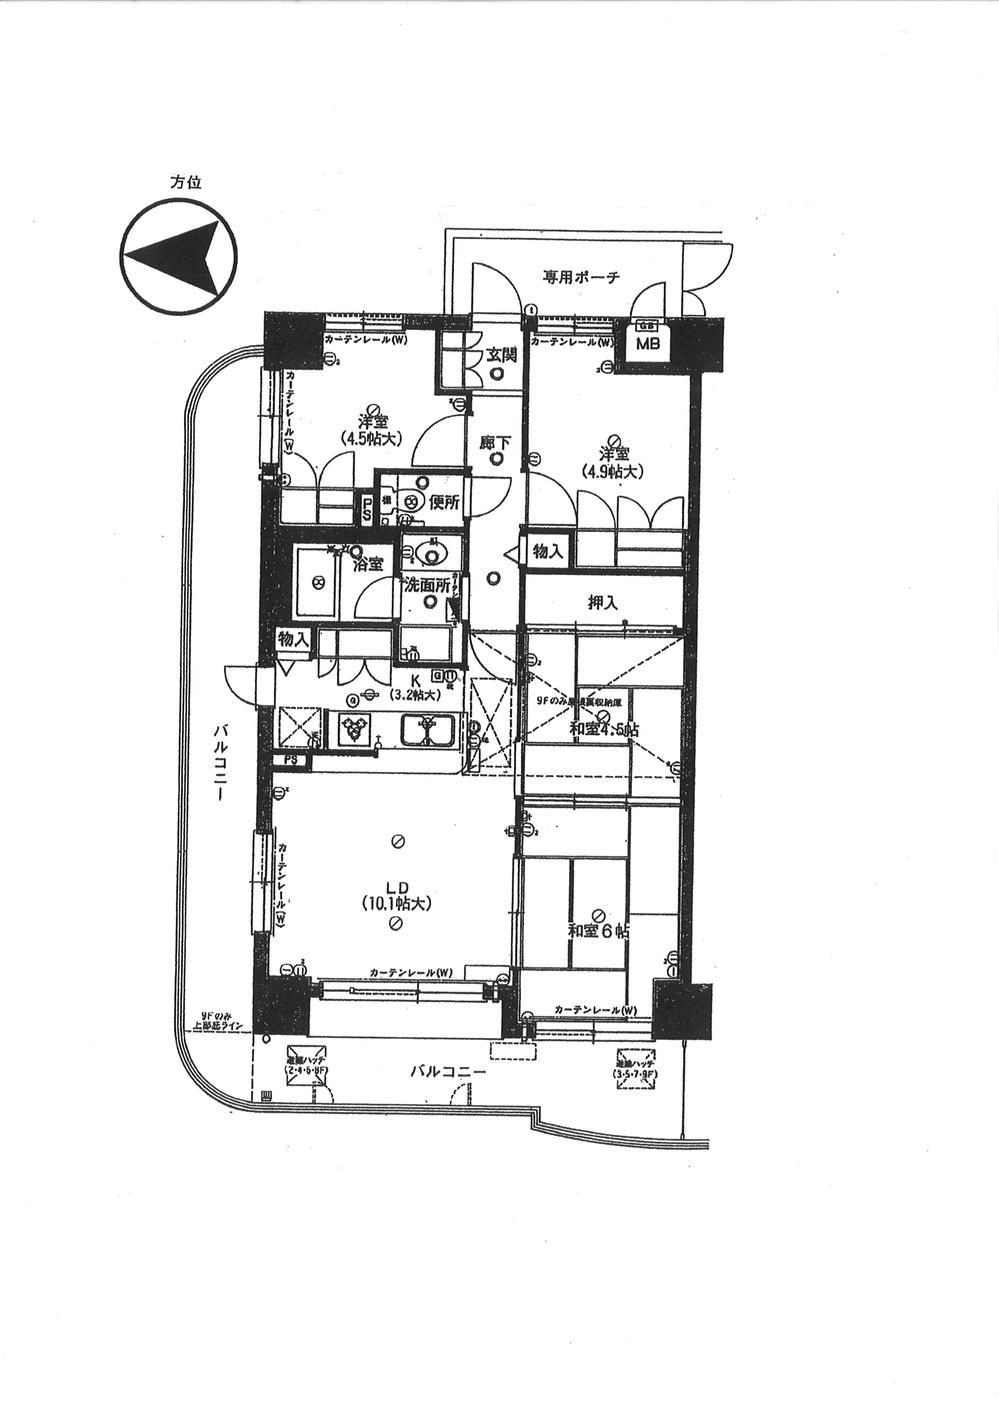 Floor plan. 4LDK, Price 10.5 million yen, Occupied area 71.33 sq m , Balcony area 23.75 sq m